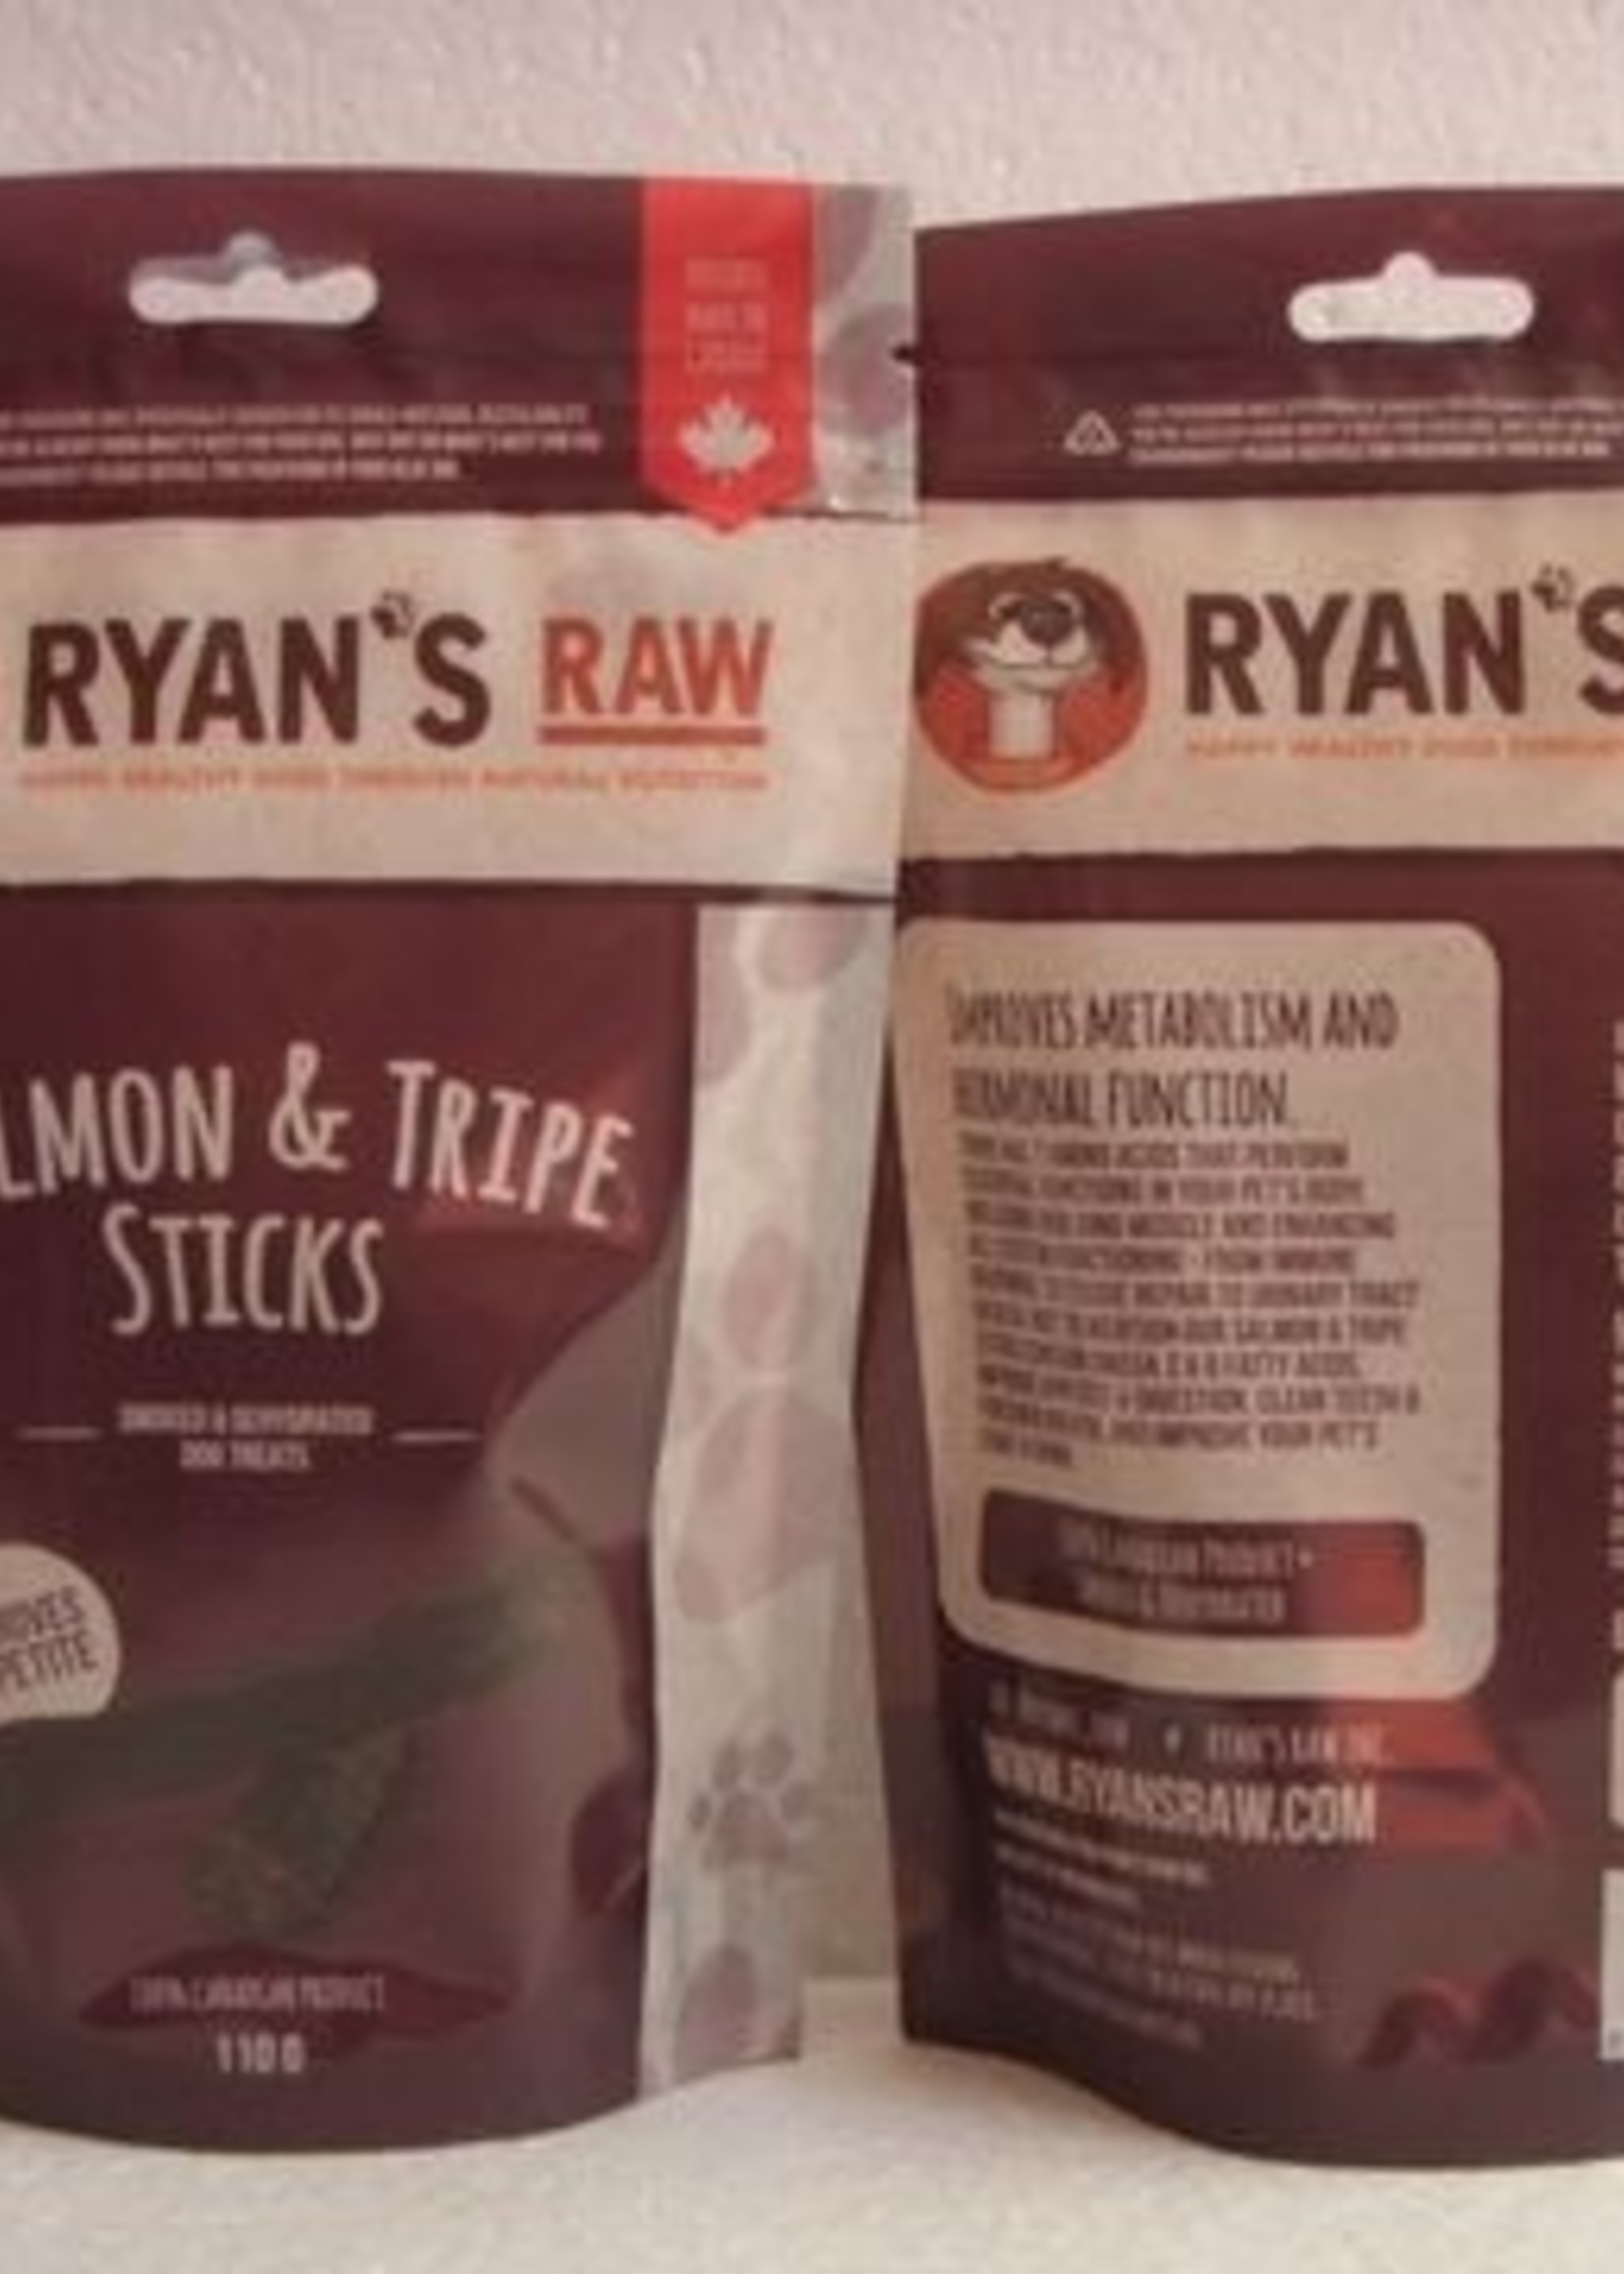 Ryan's Raw Ryan's Raw Salmon & Tripe Sticks